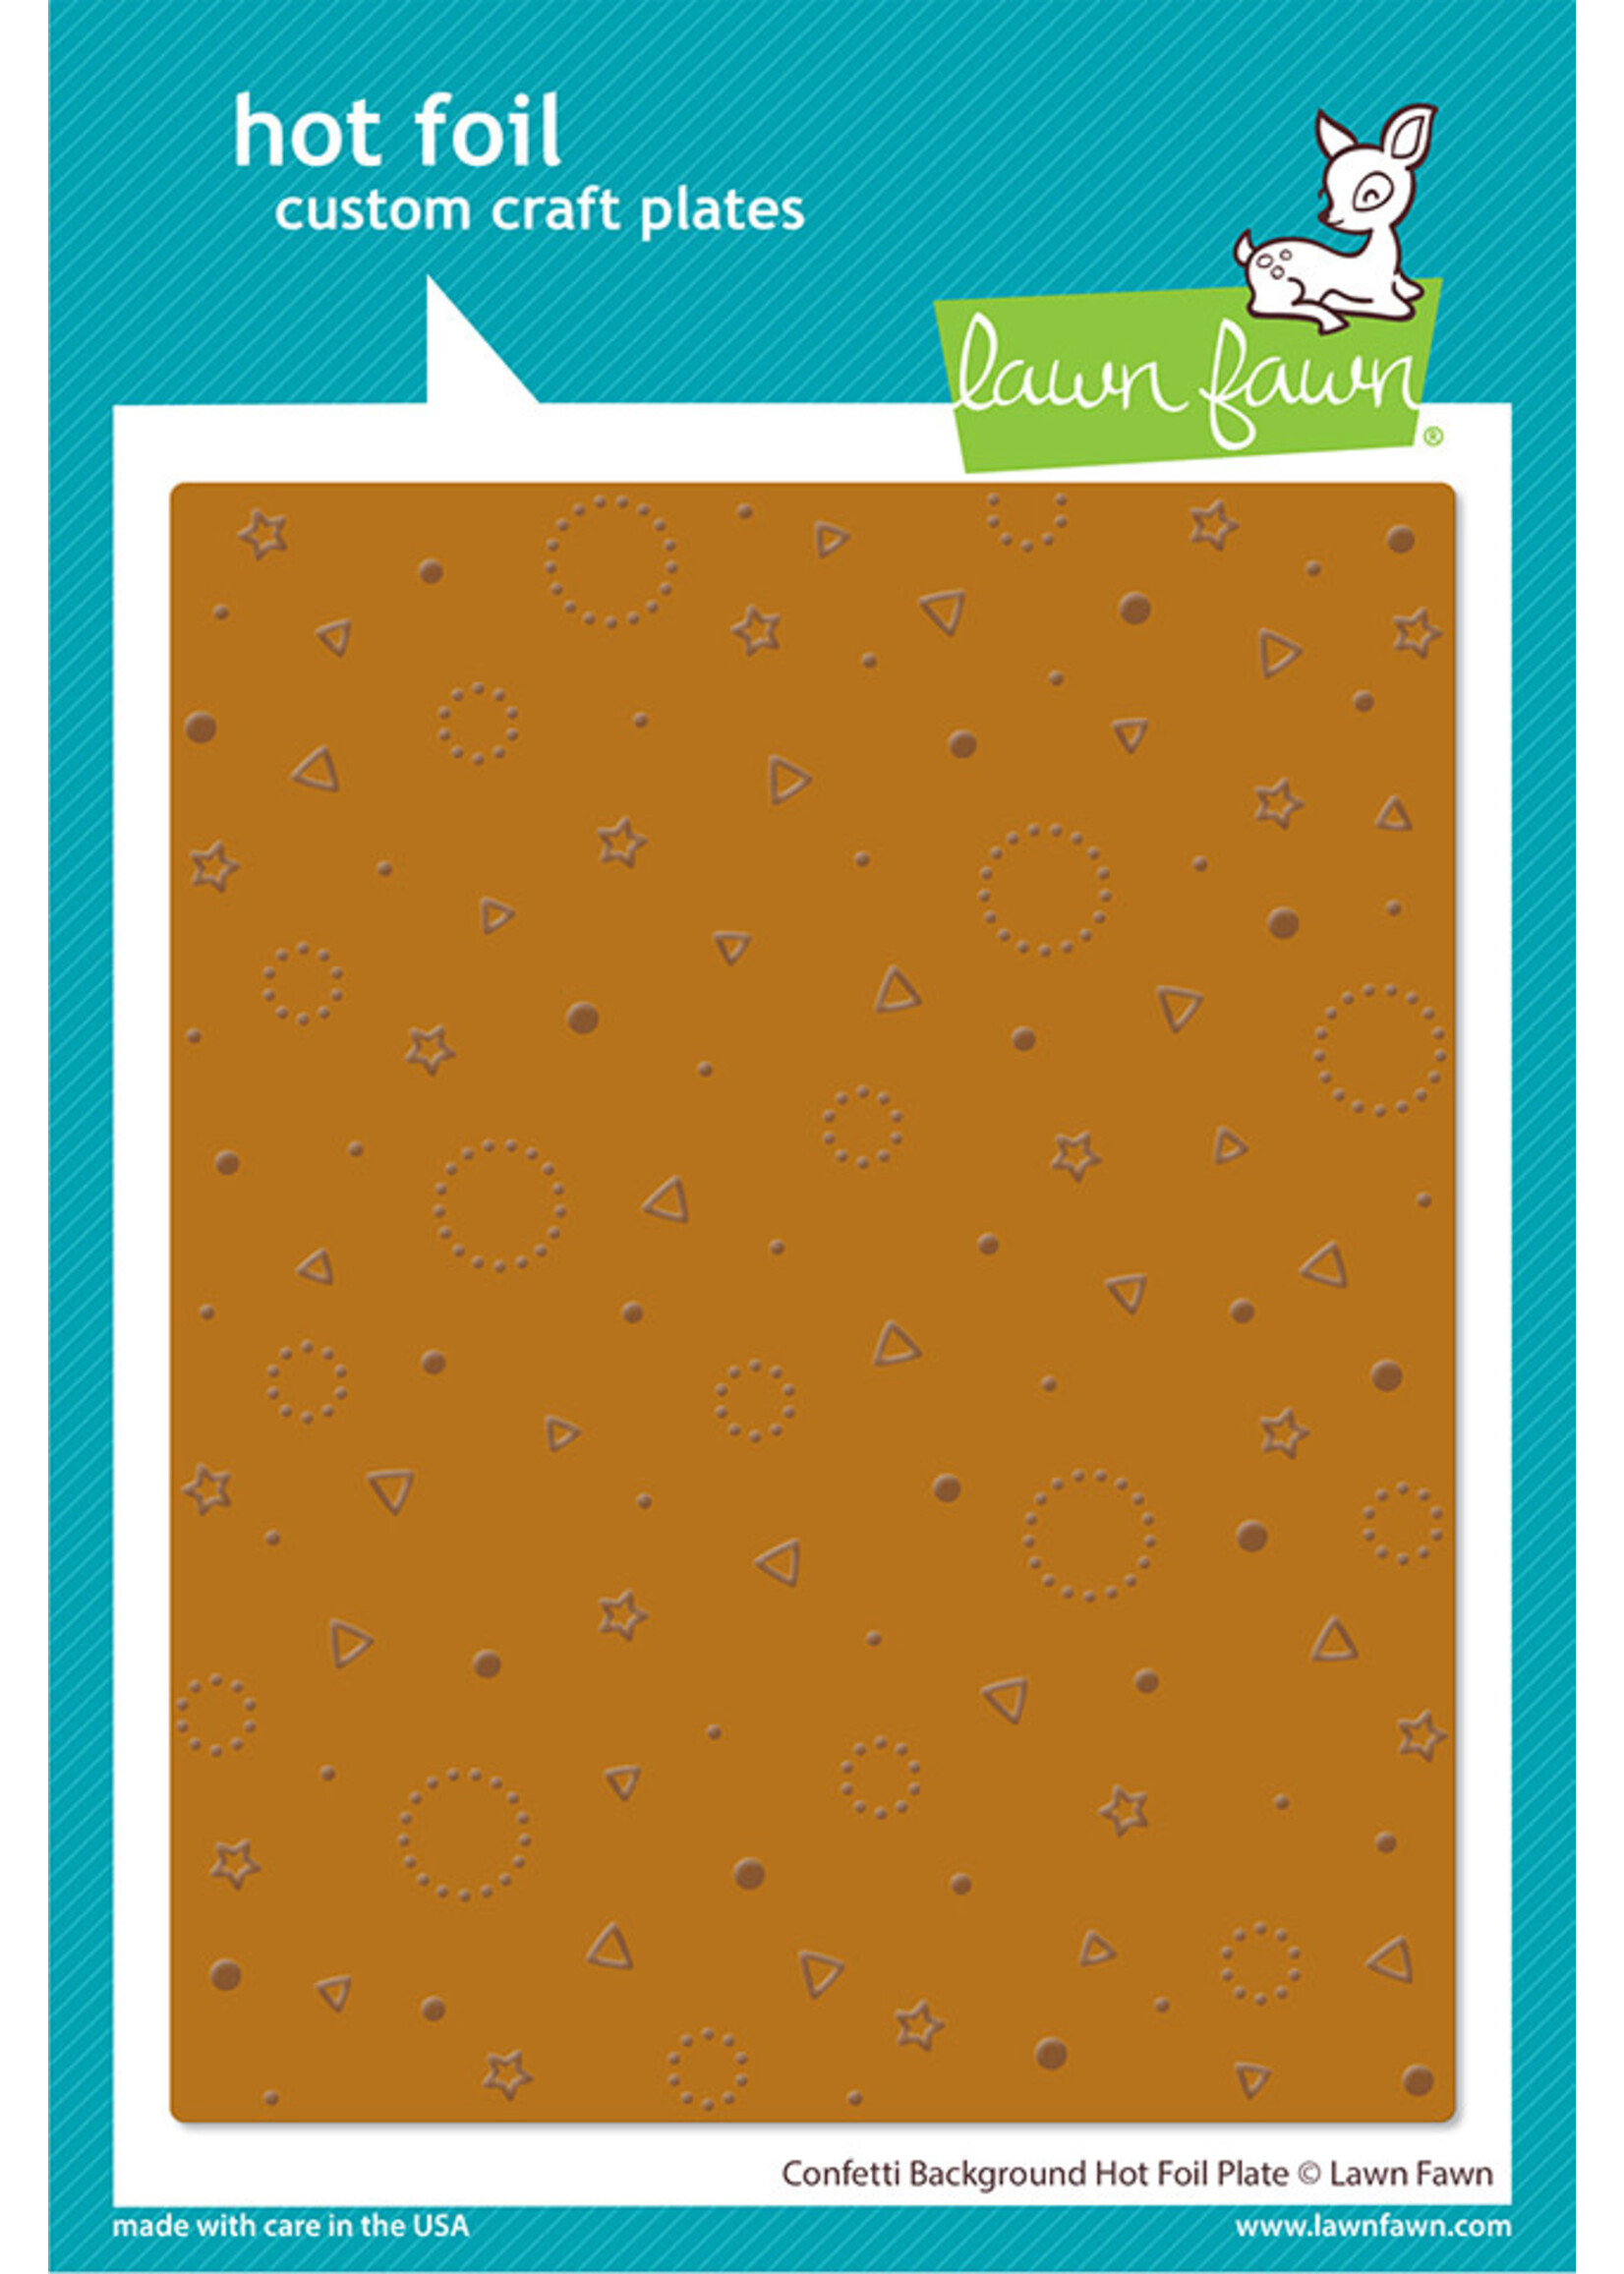 Lawn Fawn confetti background hot foil plate